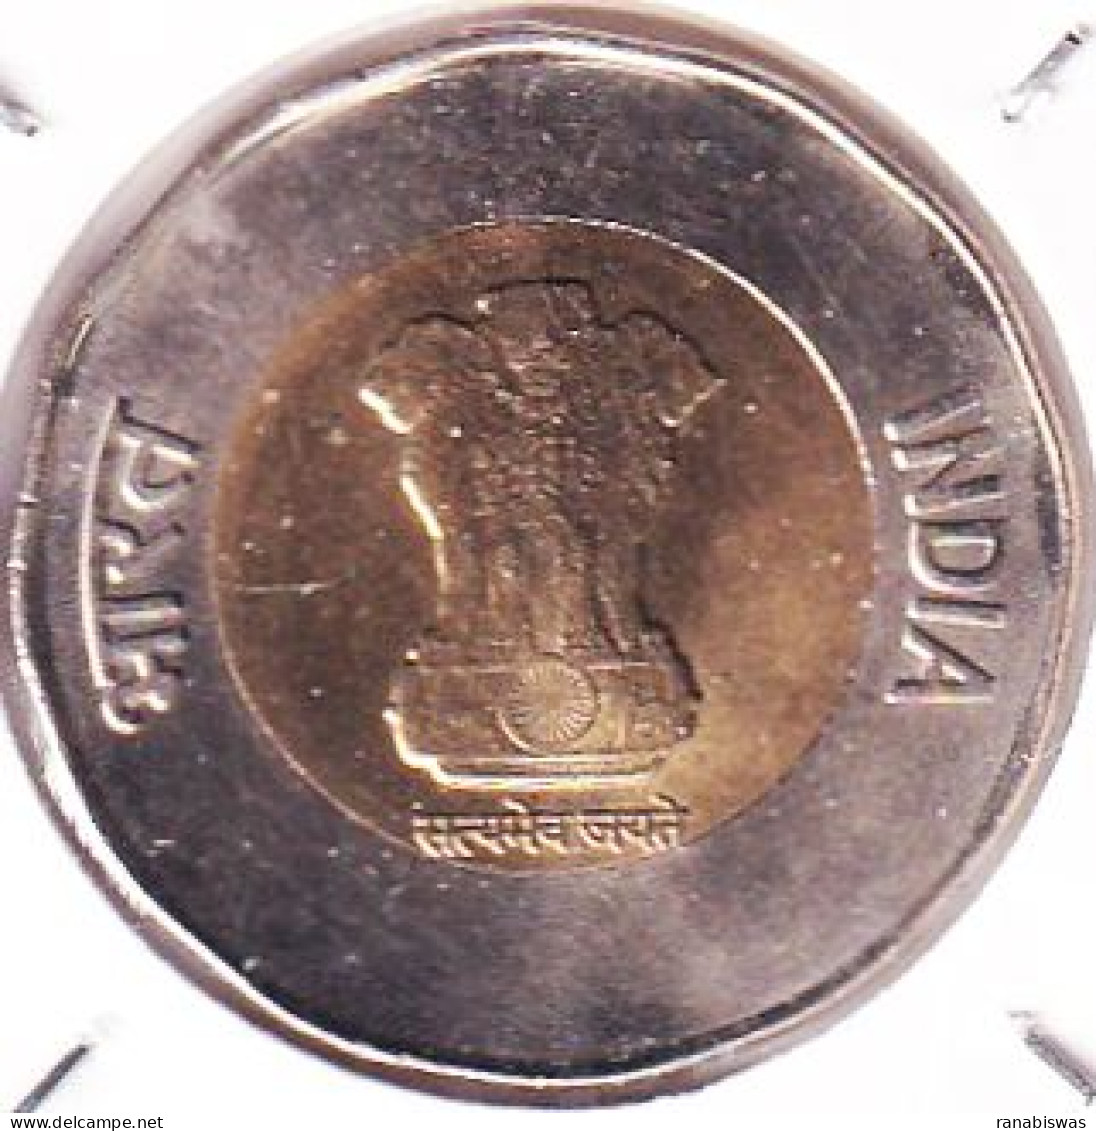 INDIA COIN LOT 440, 20 RUPEES 2020, RAIN DROPS, BOMBAY MINT, UNC - Indien